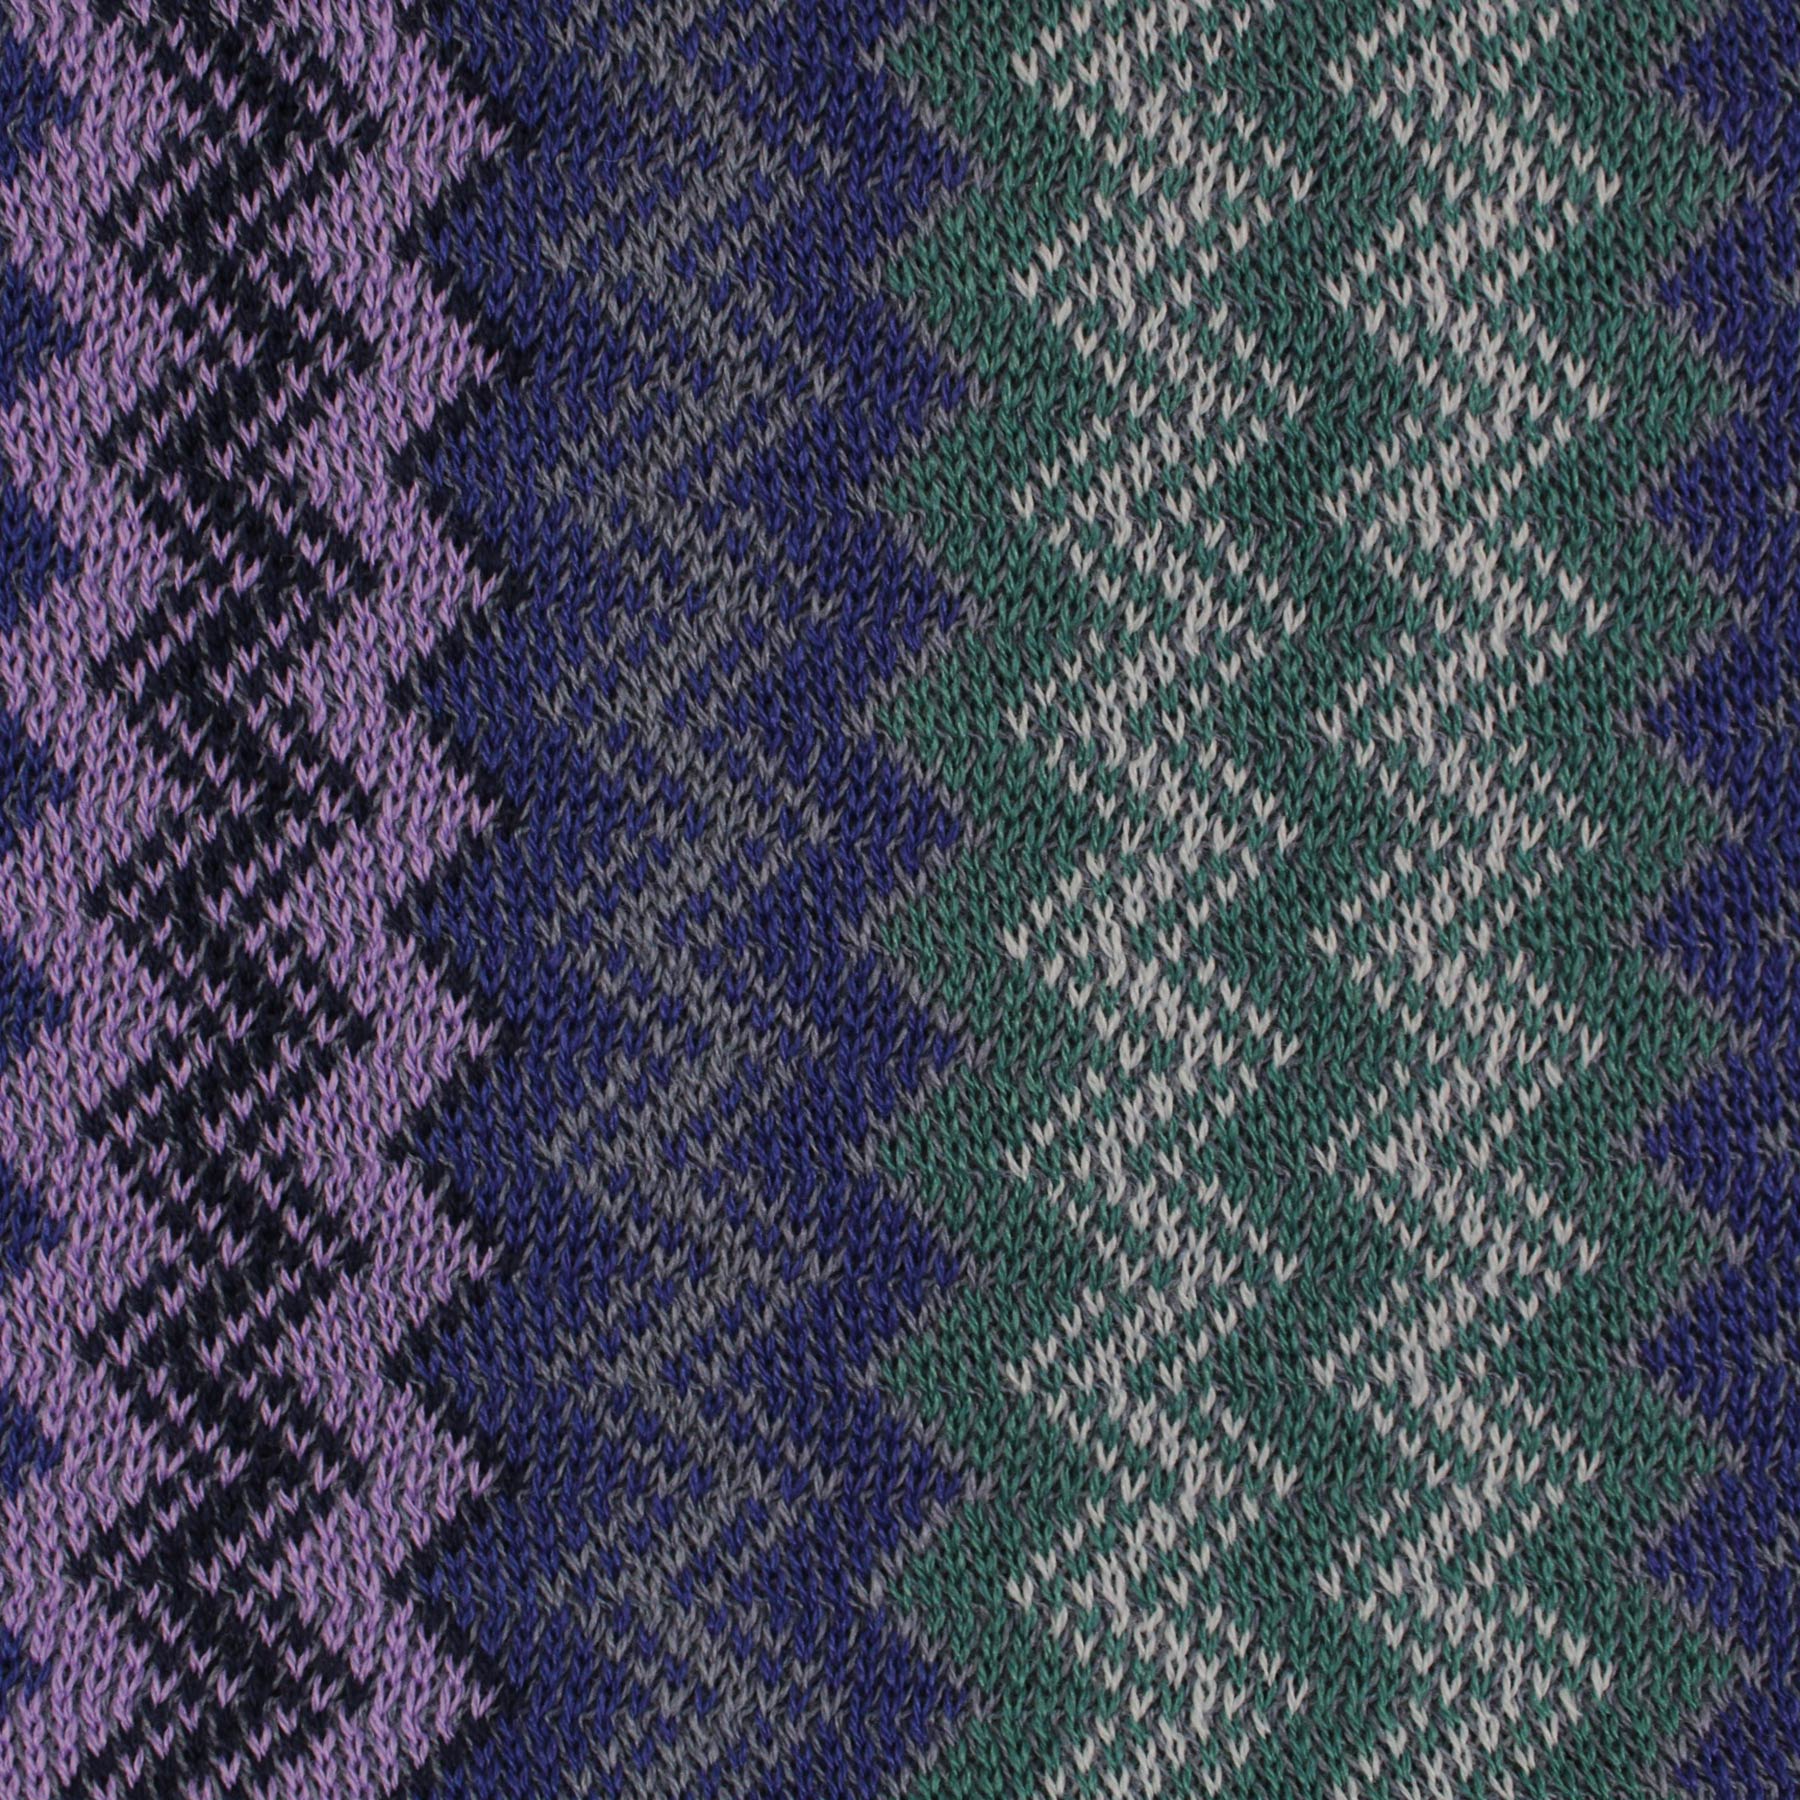 Missoni Scarf Lilac Purple Sage Green Herringbone Design - Designer Shawl